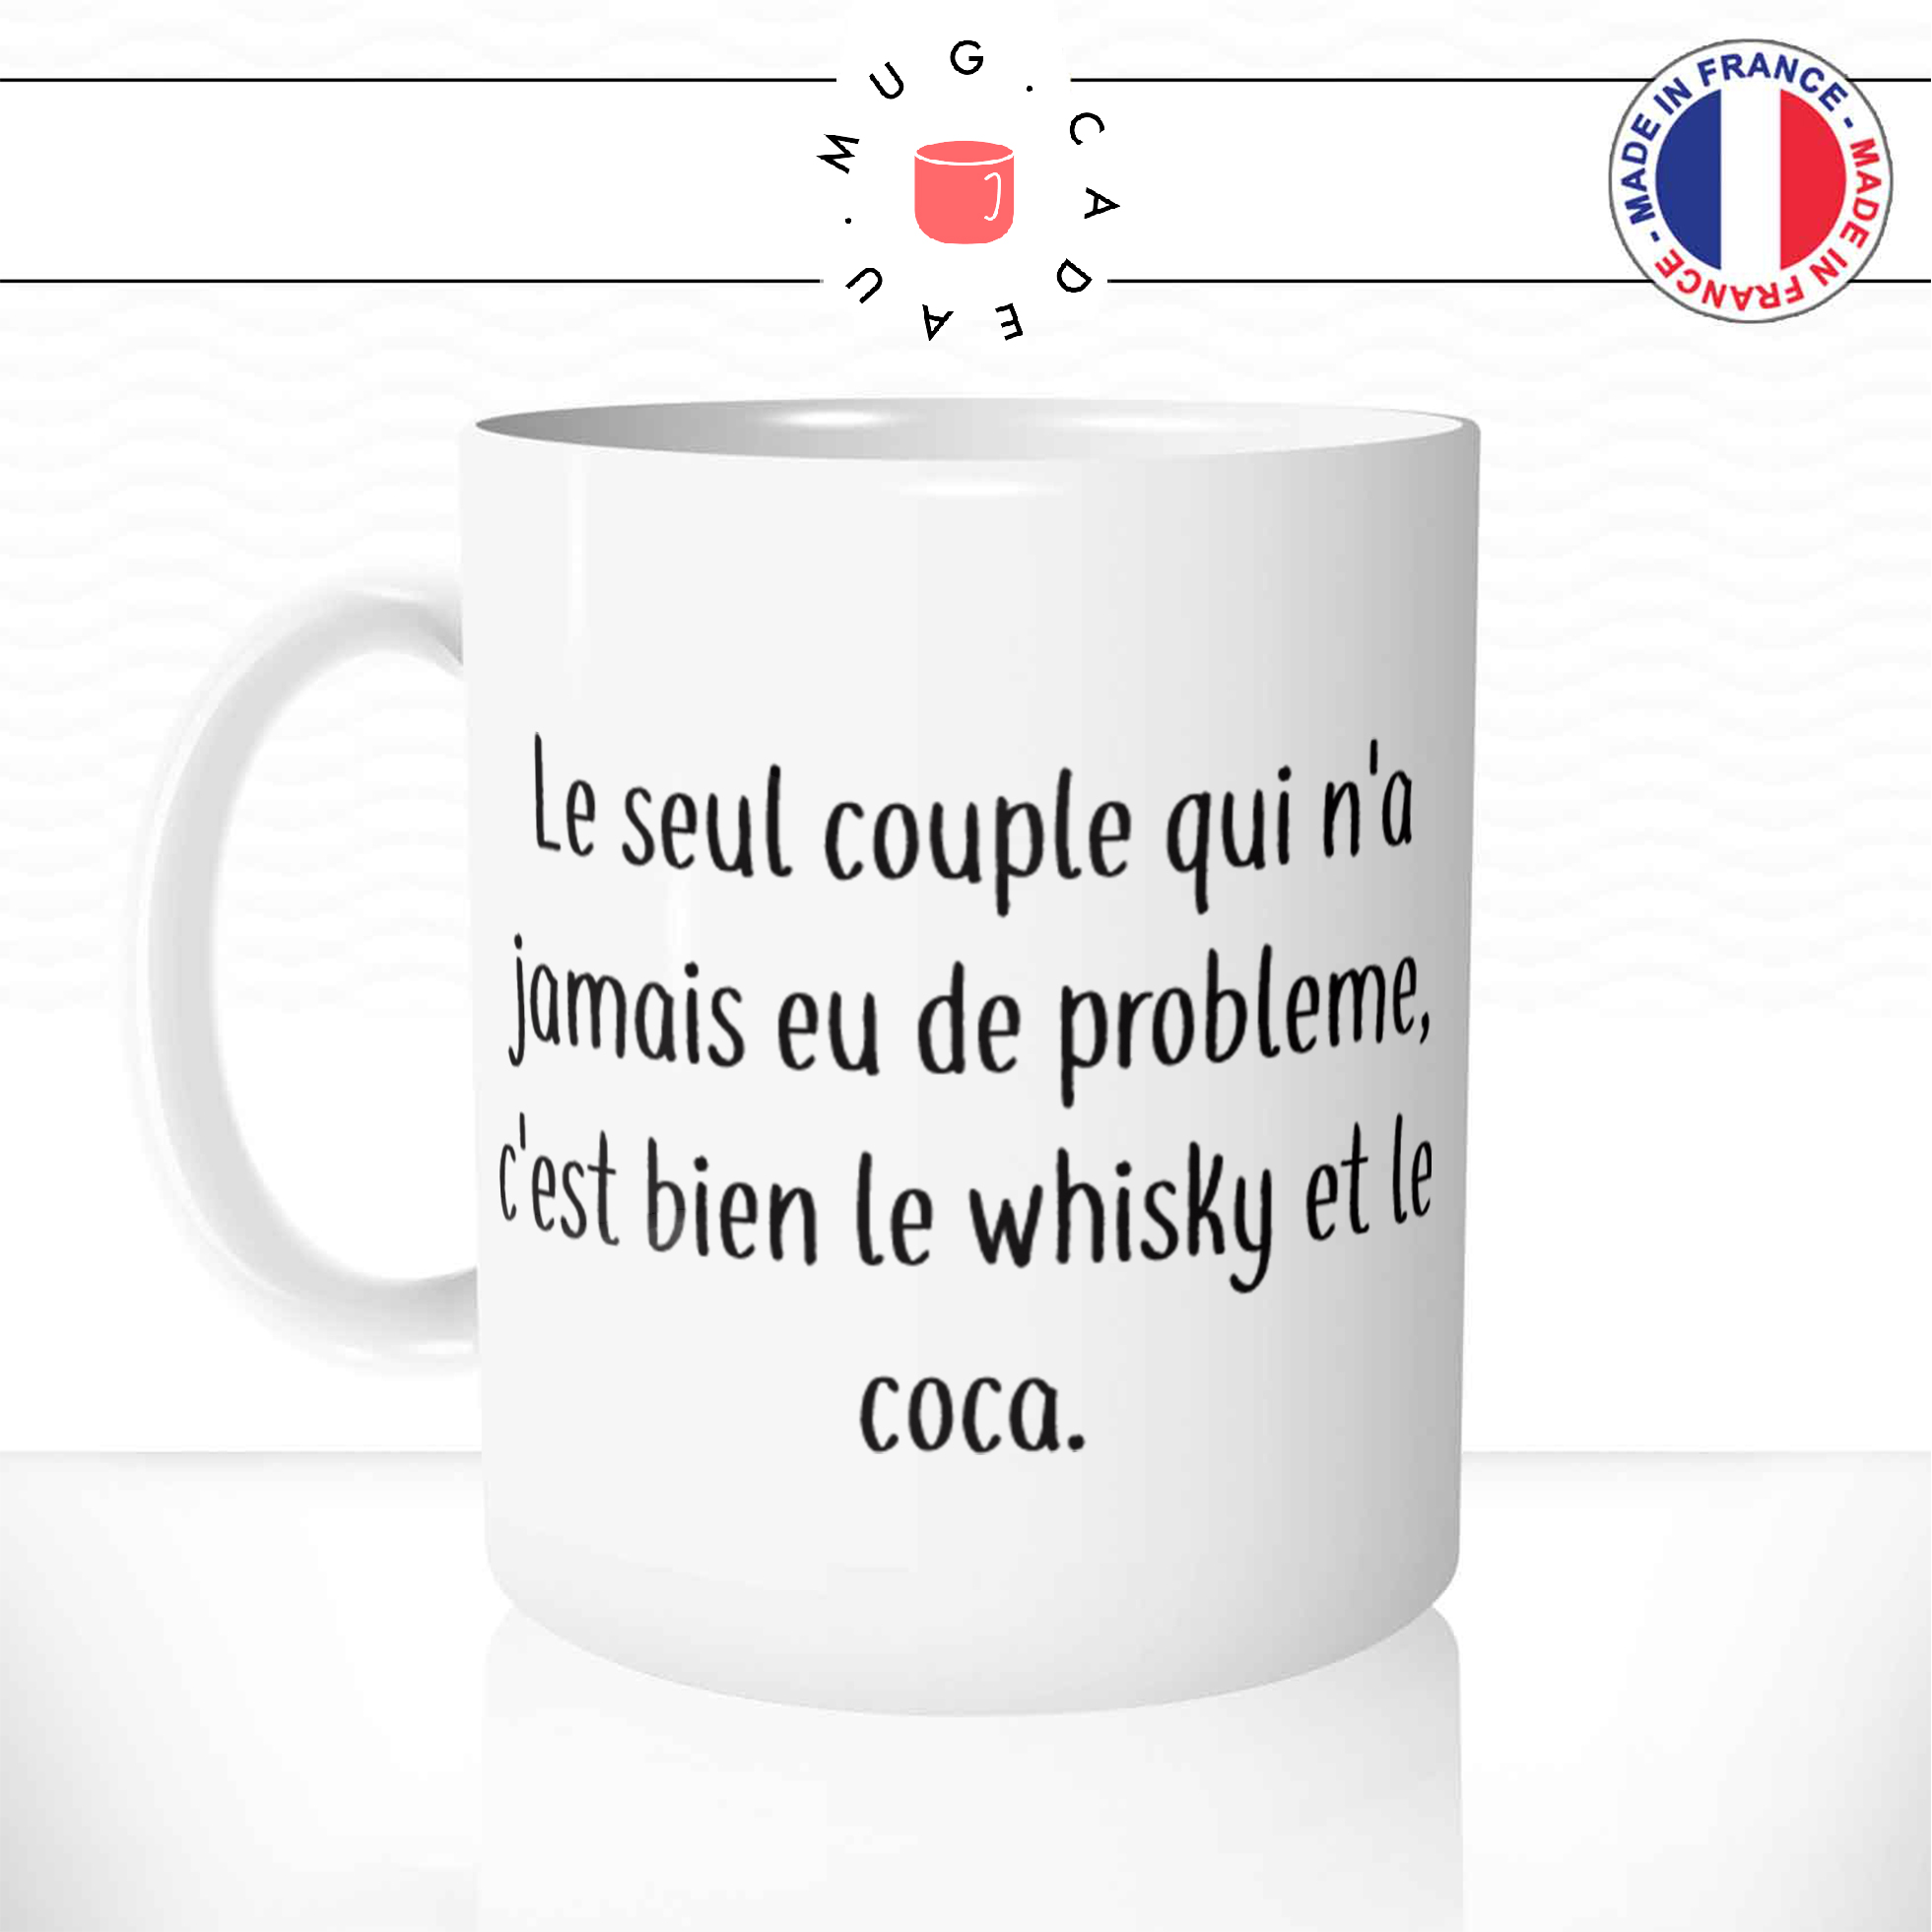 mug-tasse-ref14-citation-amour-couple-whisky-coca-no-problemes-cafe-the-mugs-tasses-personnalise-anse-gauche